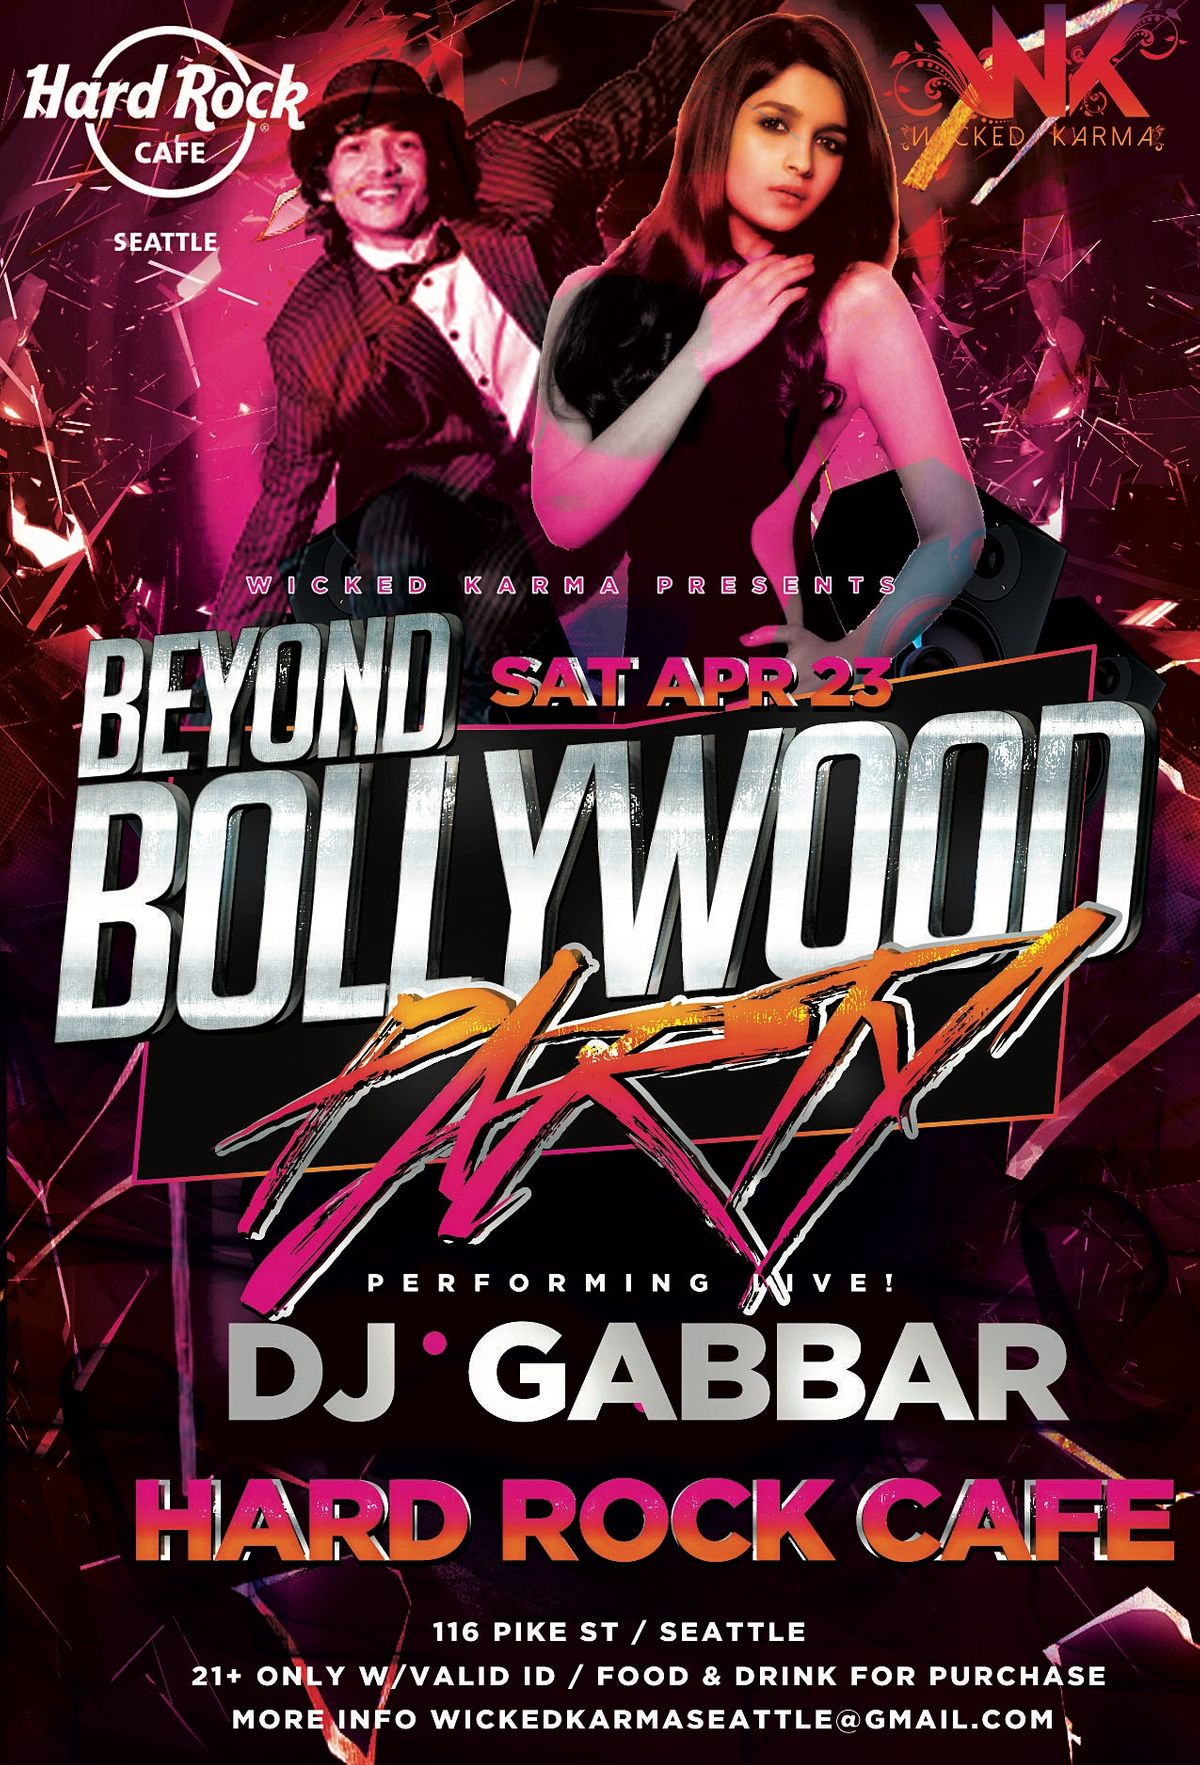 Wicked Karma Presents: Beyond Bollywood Dance Party with DJ Gabbar